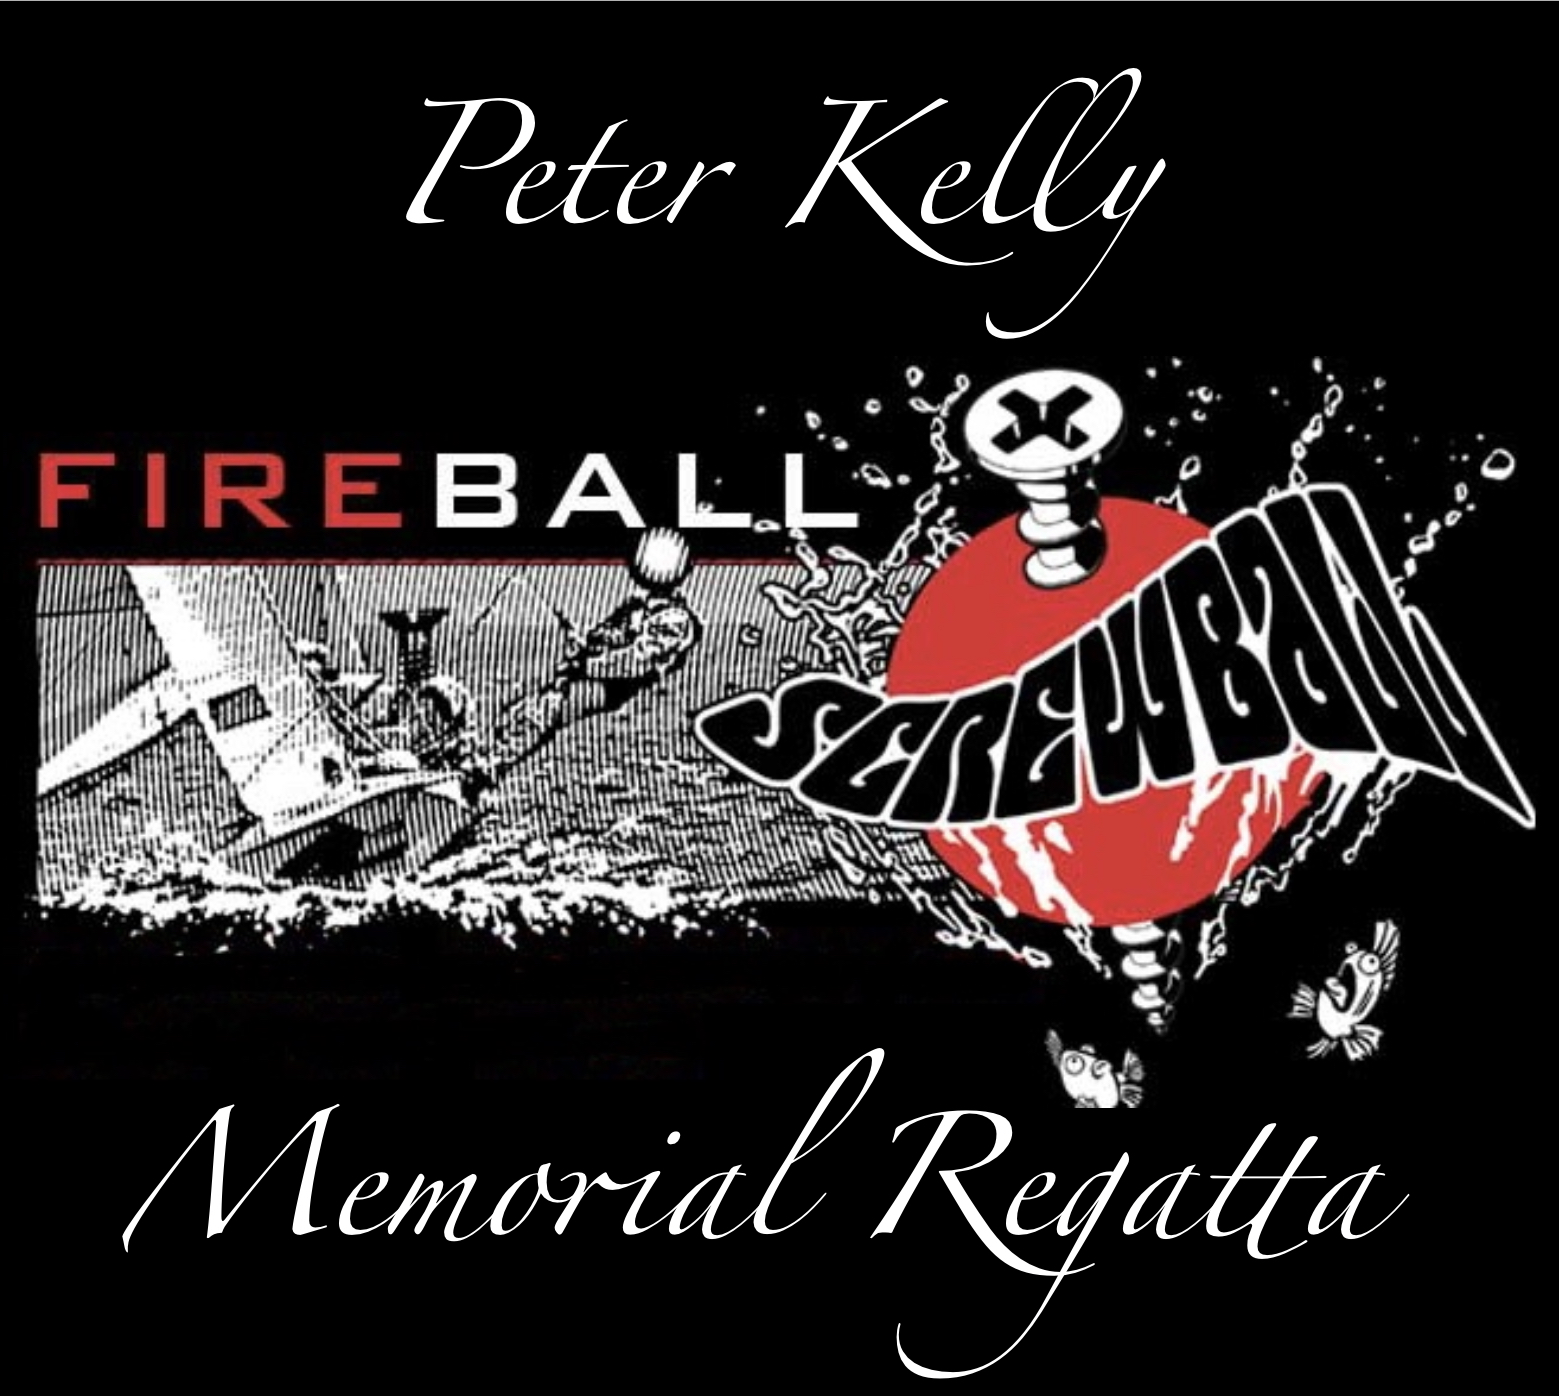 The Peter Kelly Fireball/Screwball Memorial Regatta